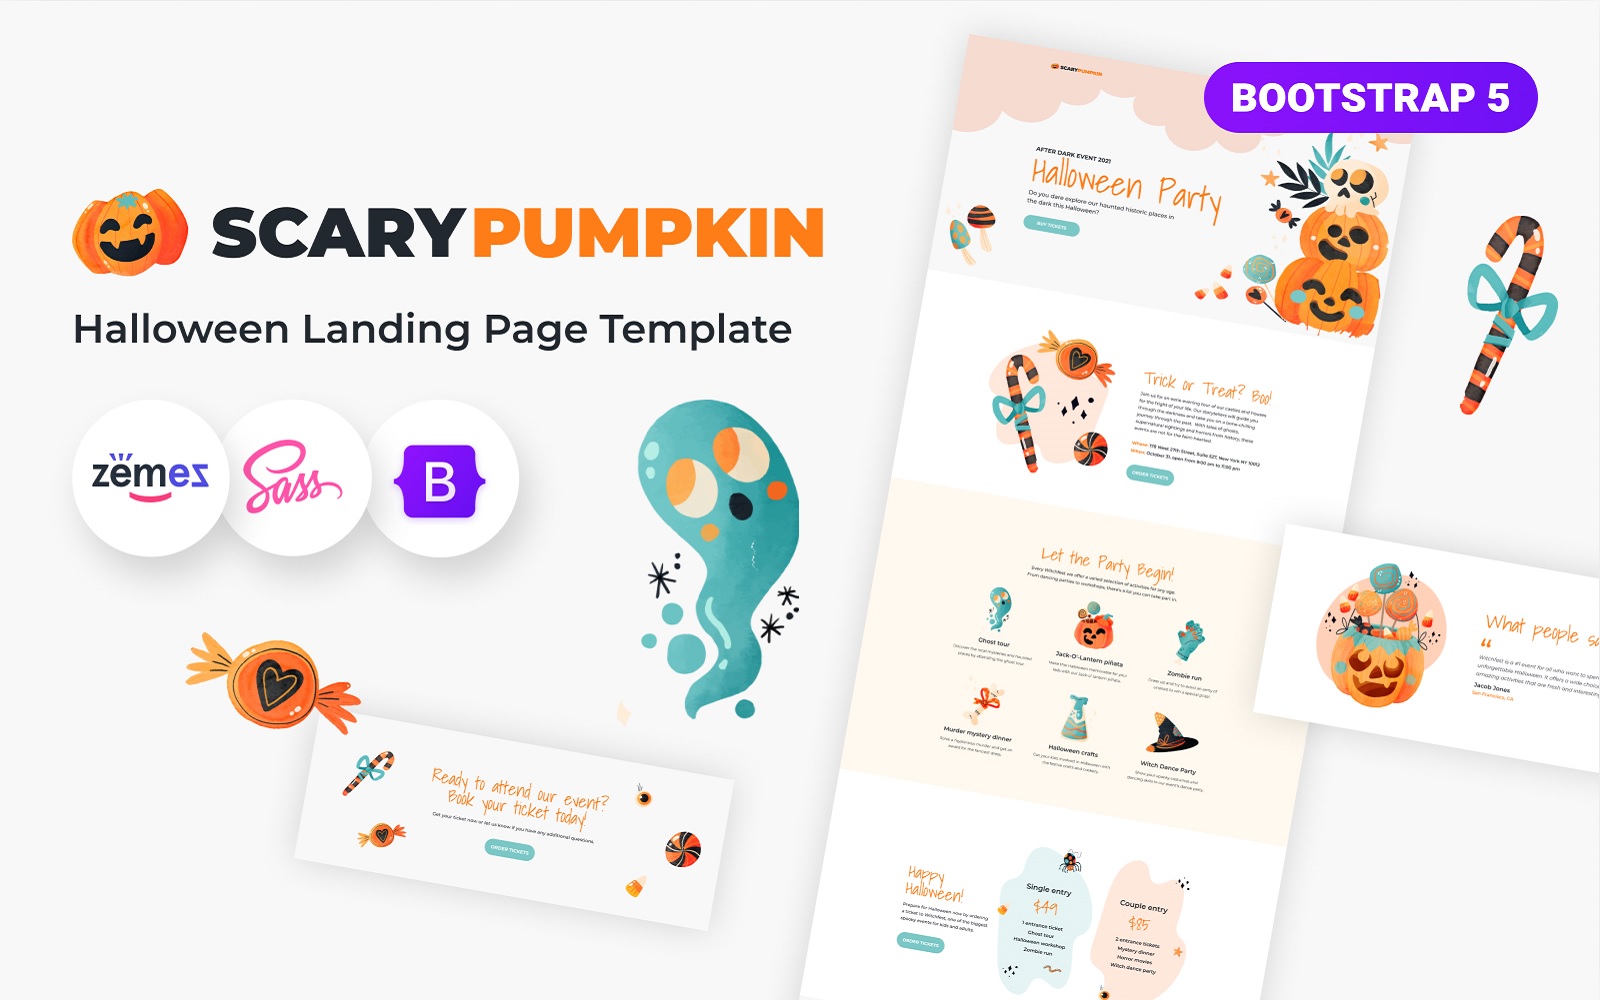 Scarypumpkin - Halloween Landing Page Template